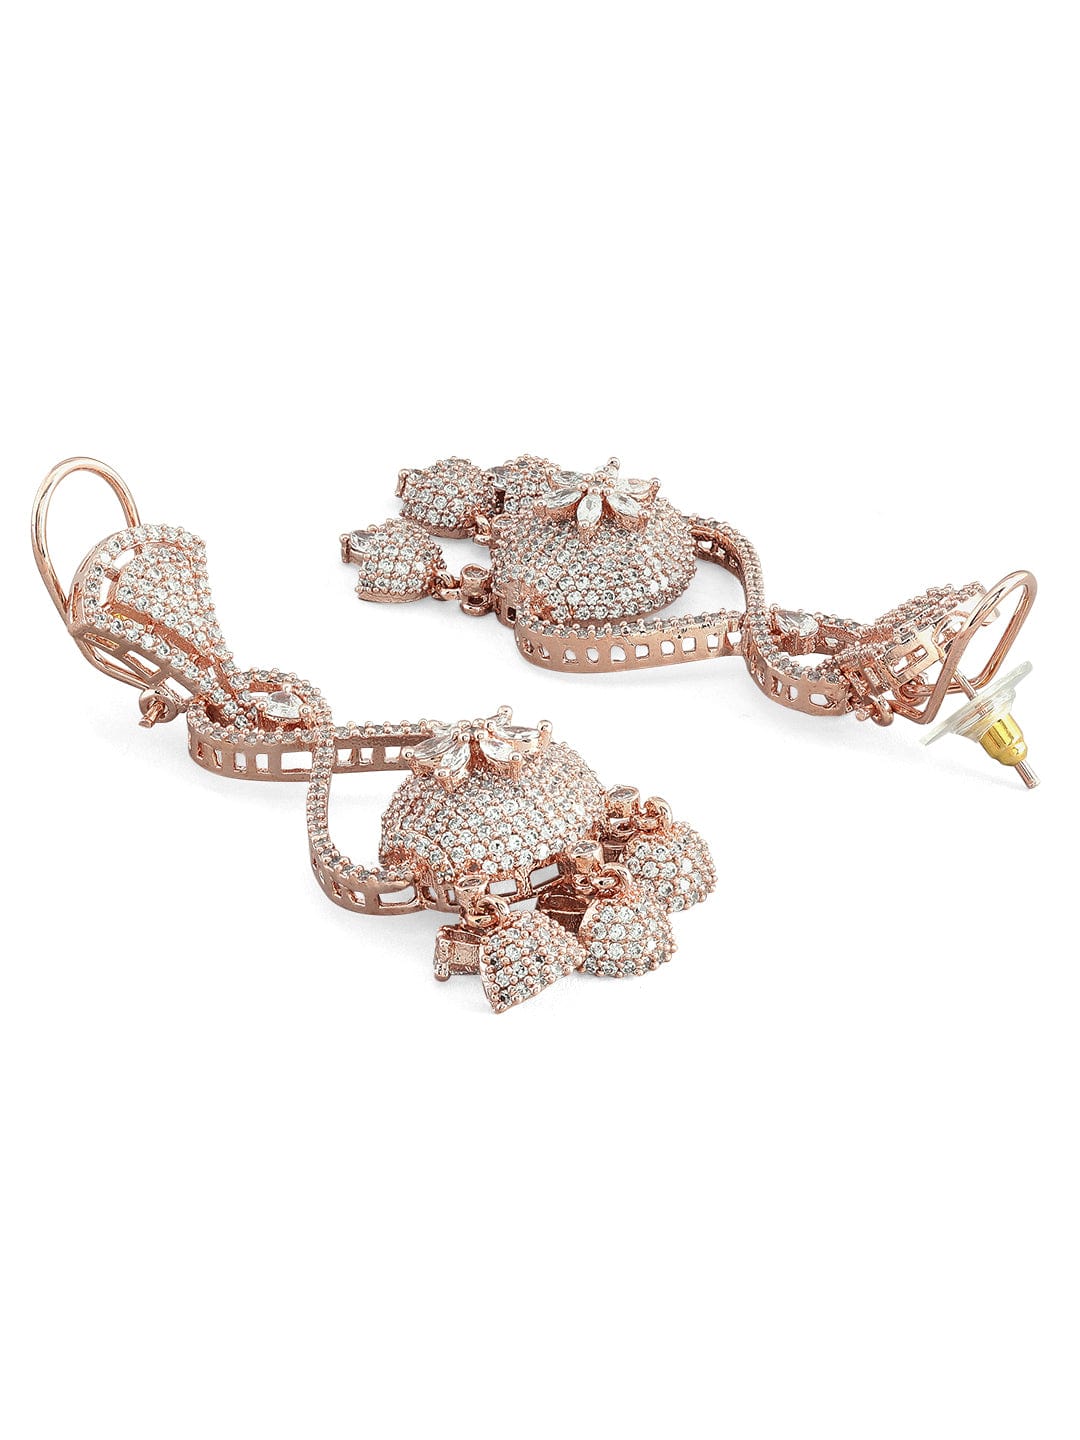 Rubans Rose Gold-Plated White Ad Drop Earrings Earrings